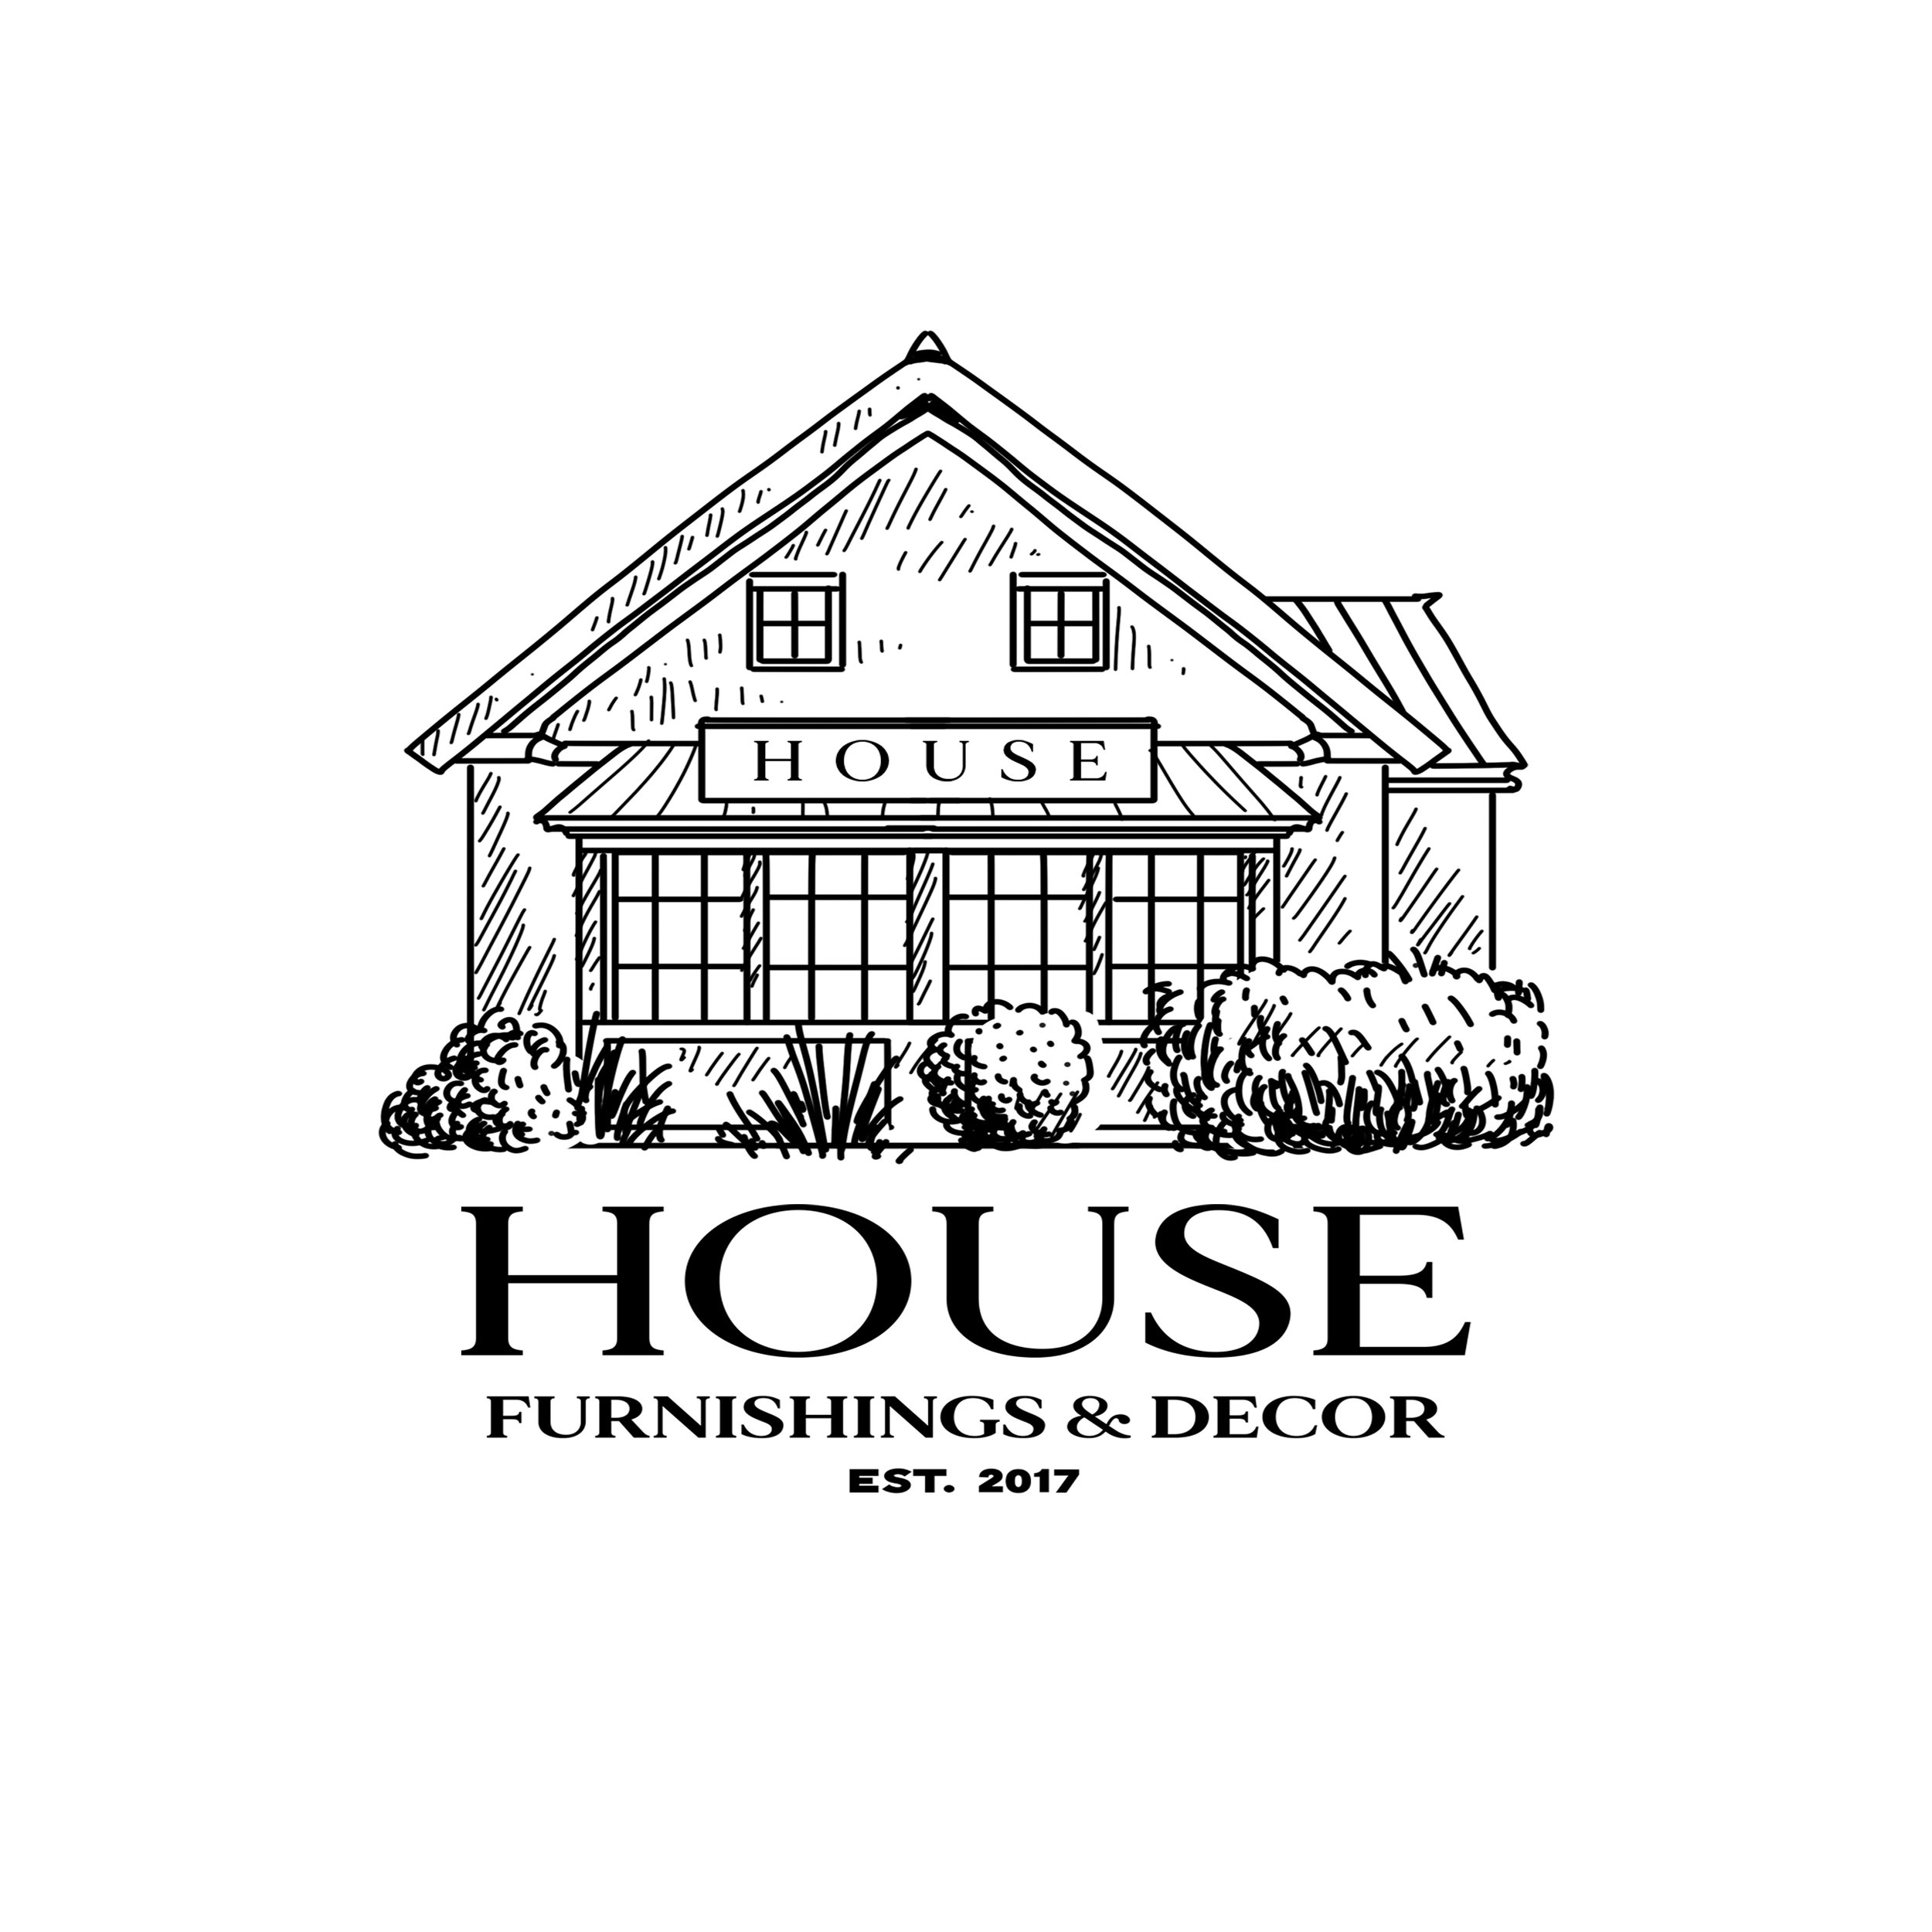 House Furnishings & Decor